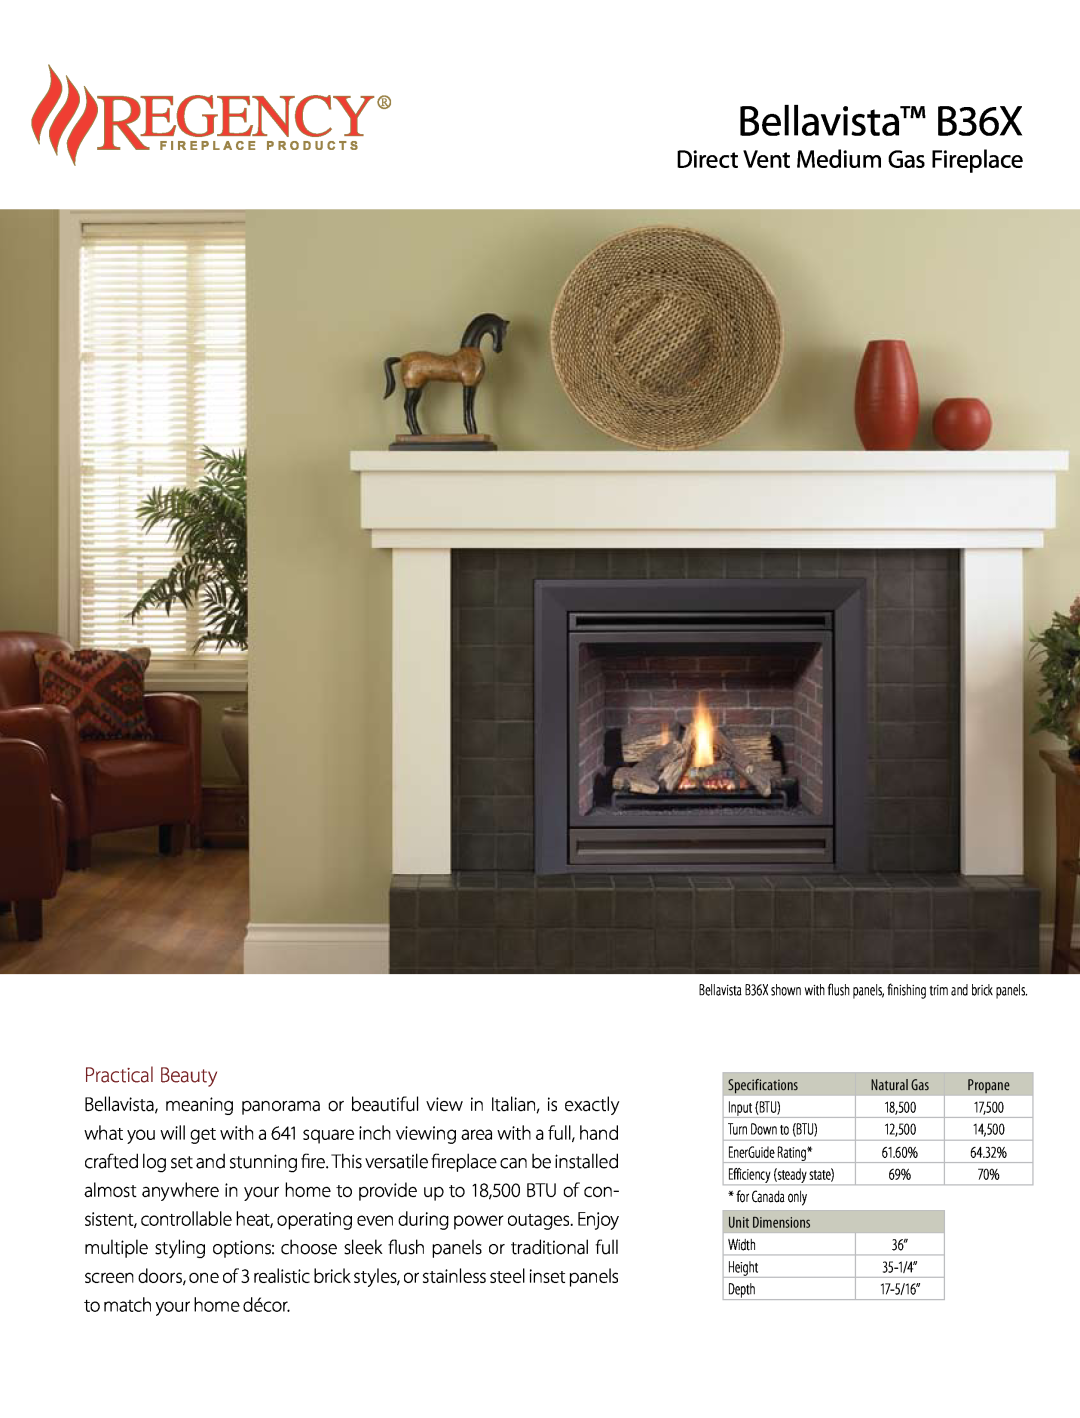 Regency Bellavista B36X specifications Direct Vent Medium Gas Fireplace, Practical Beauty 